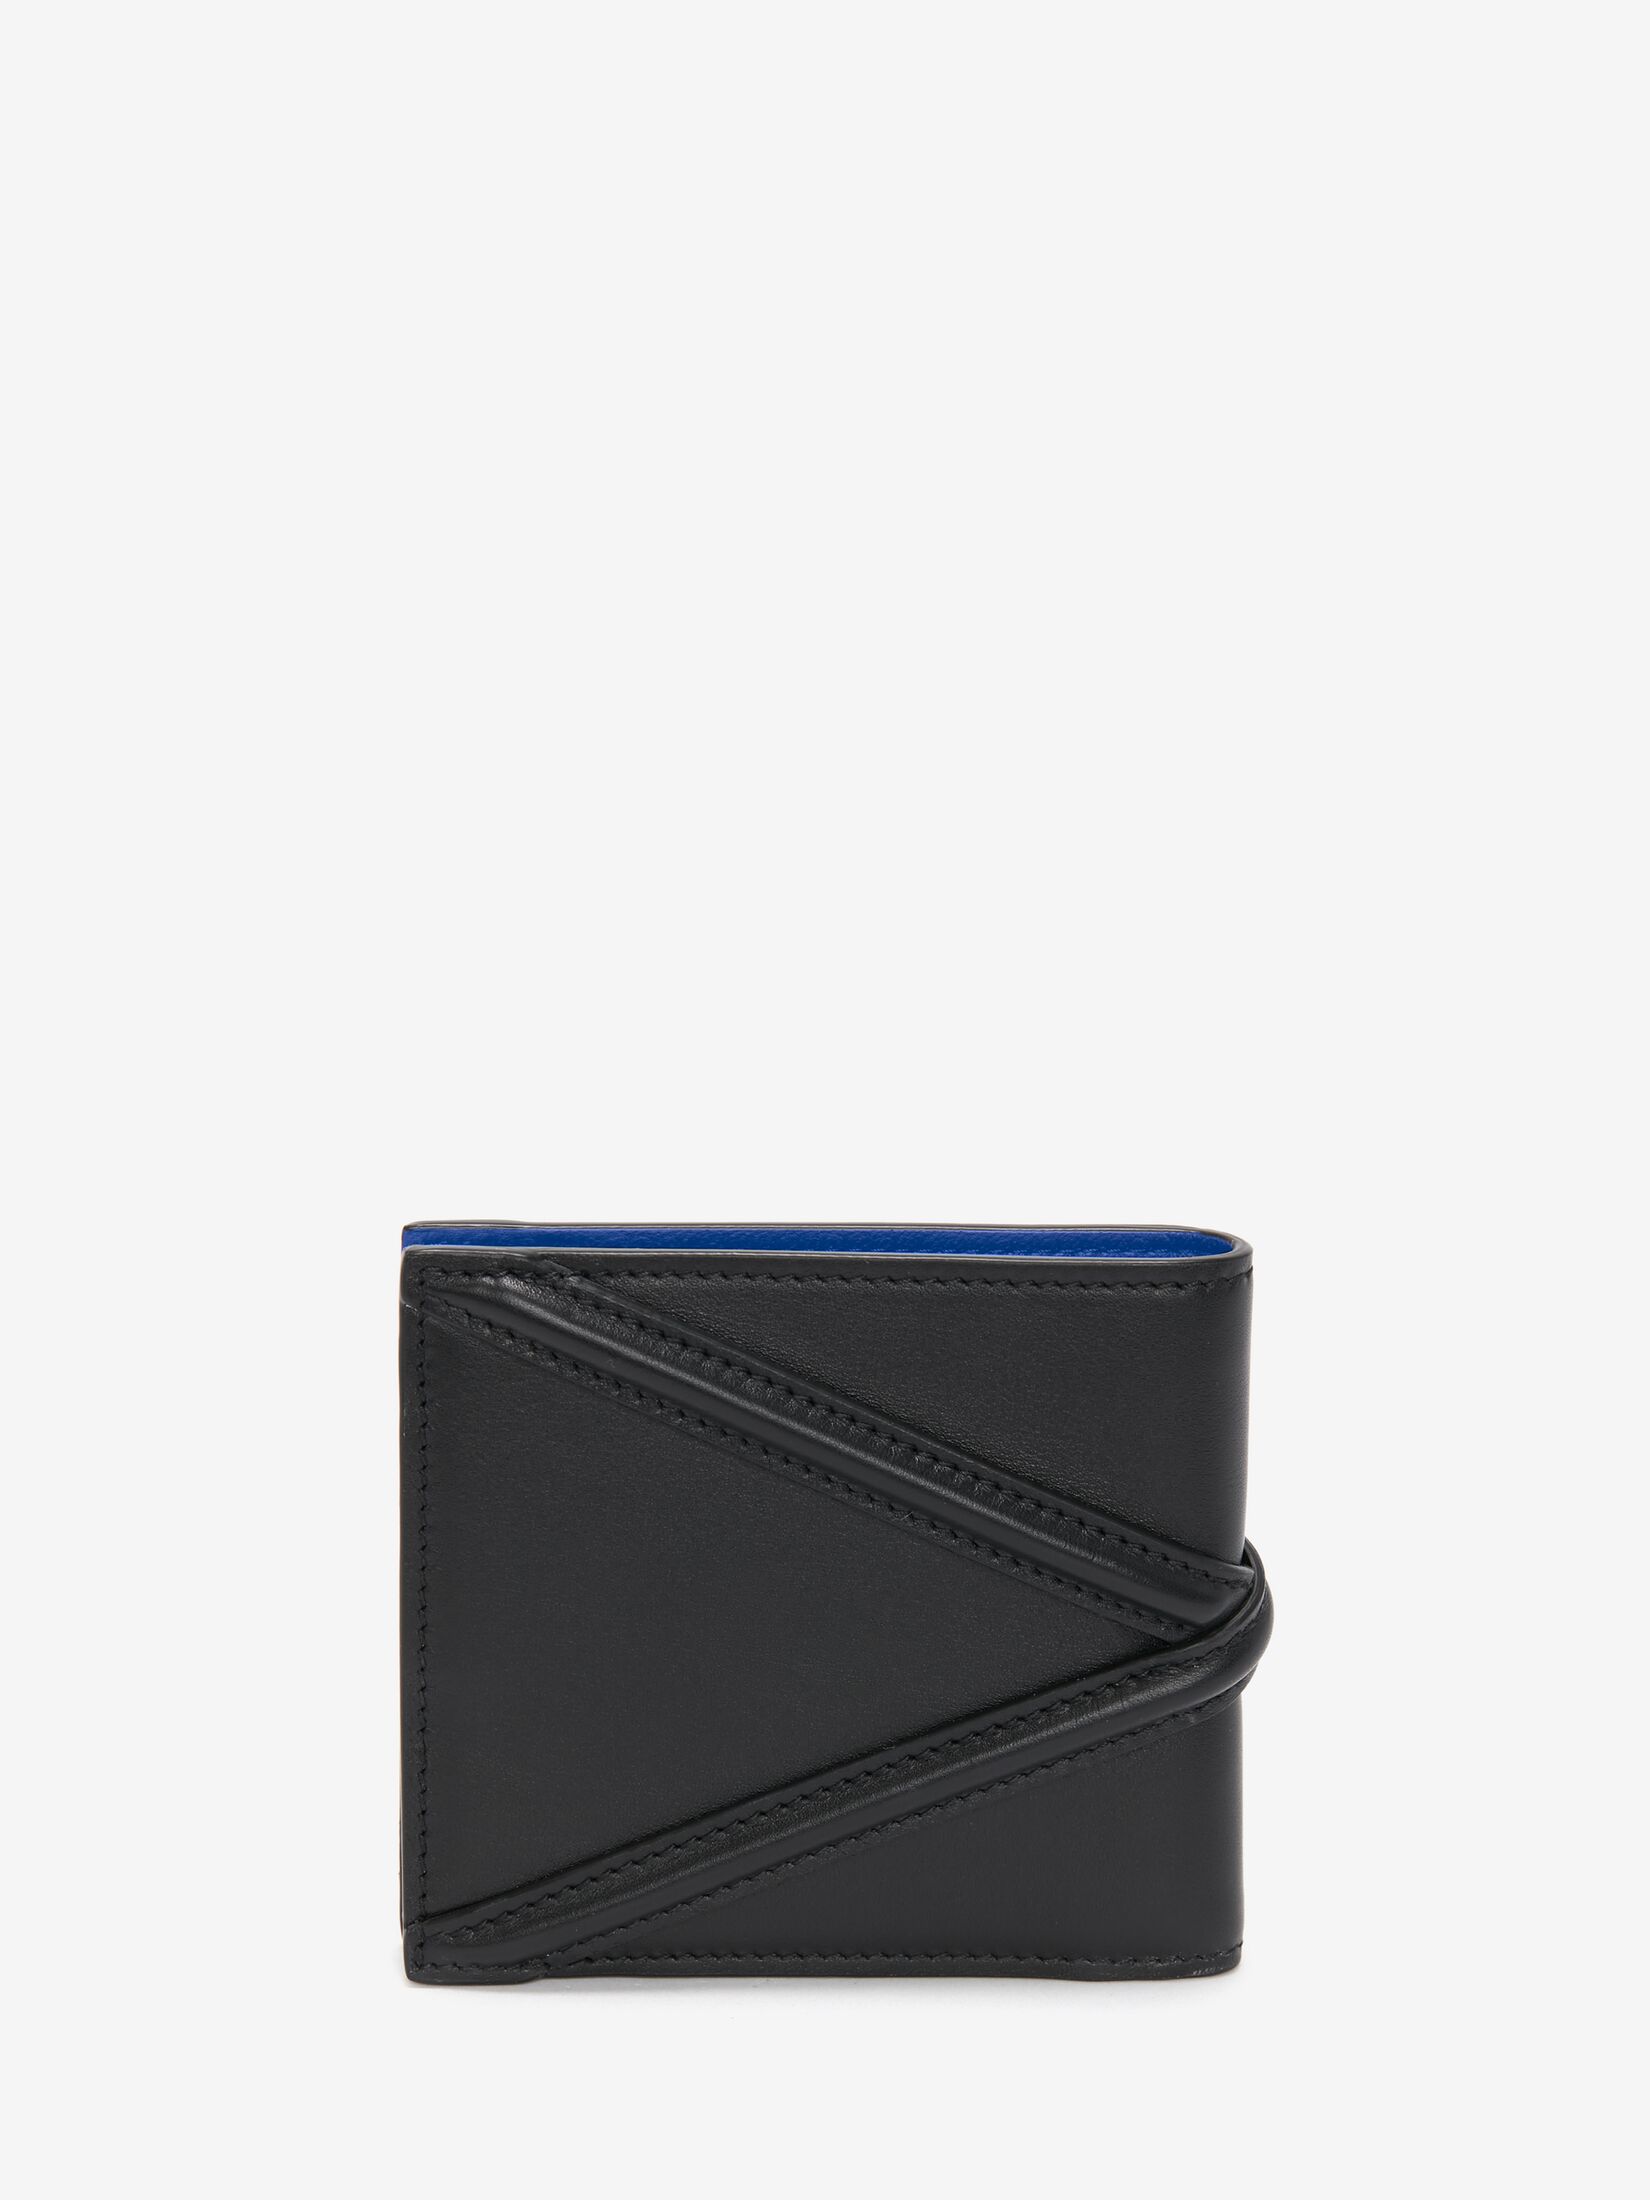 The Harness billfold wallet